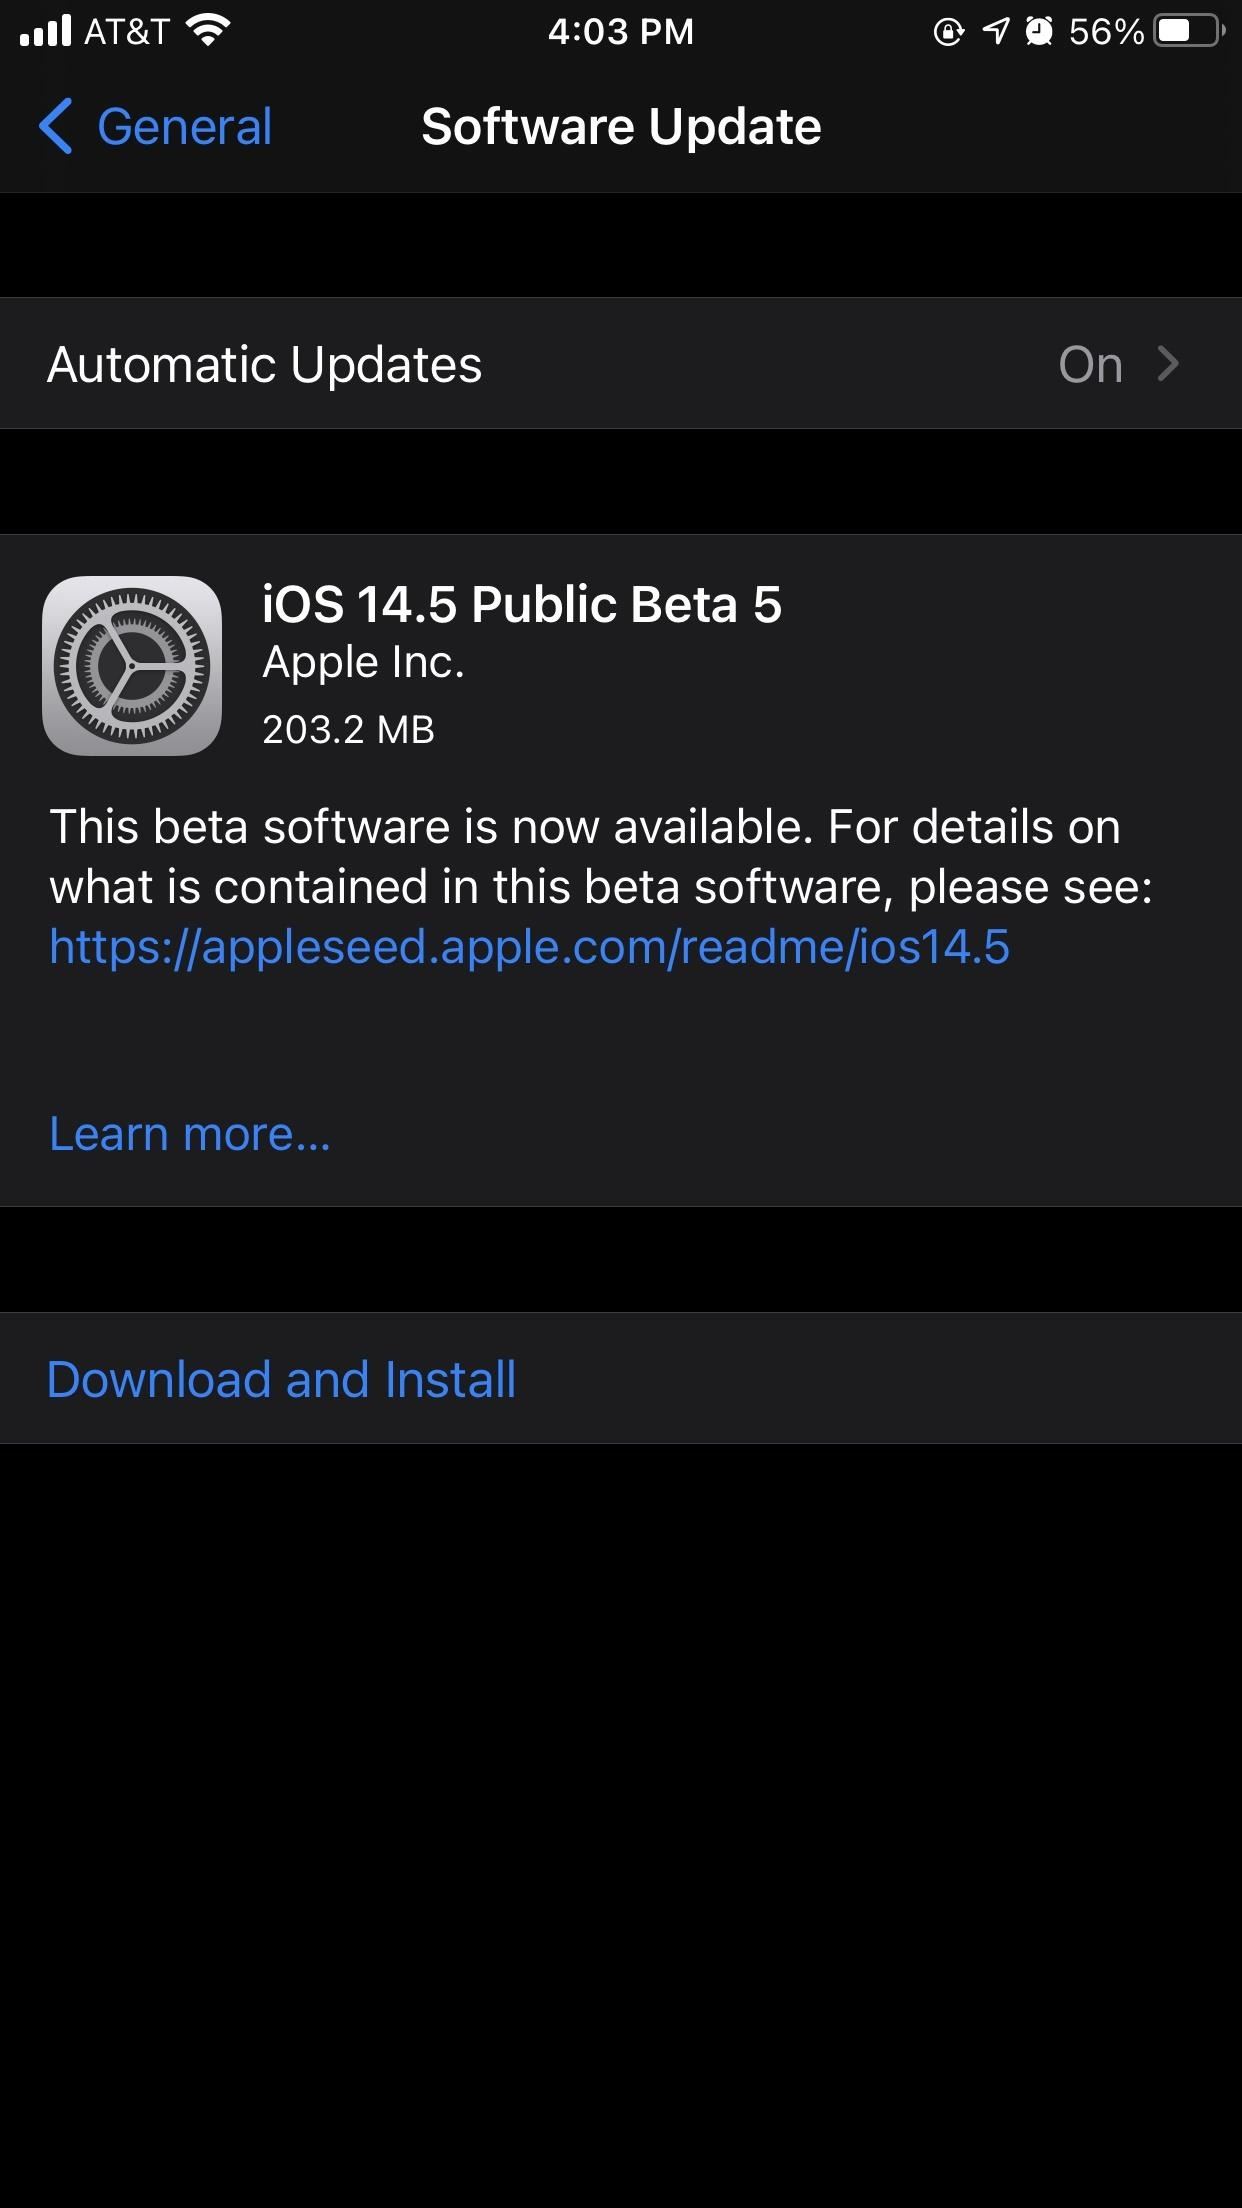 Apple Releases iOS 14.5 Public Beta 5 for iPhone